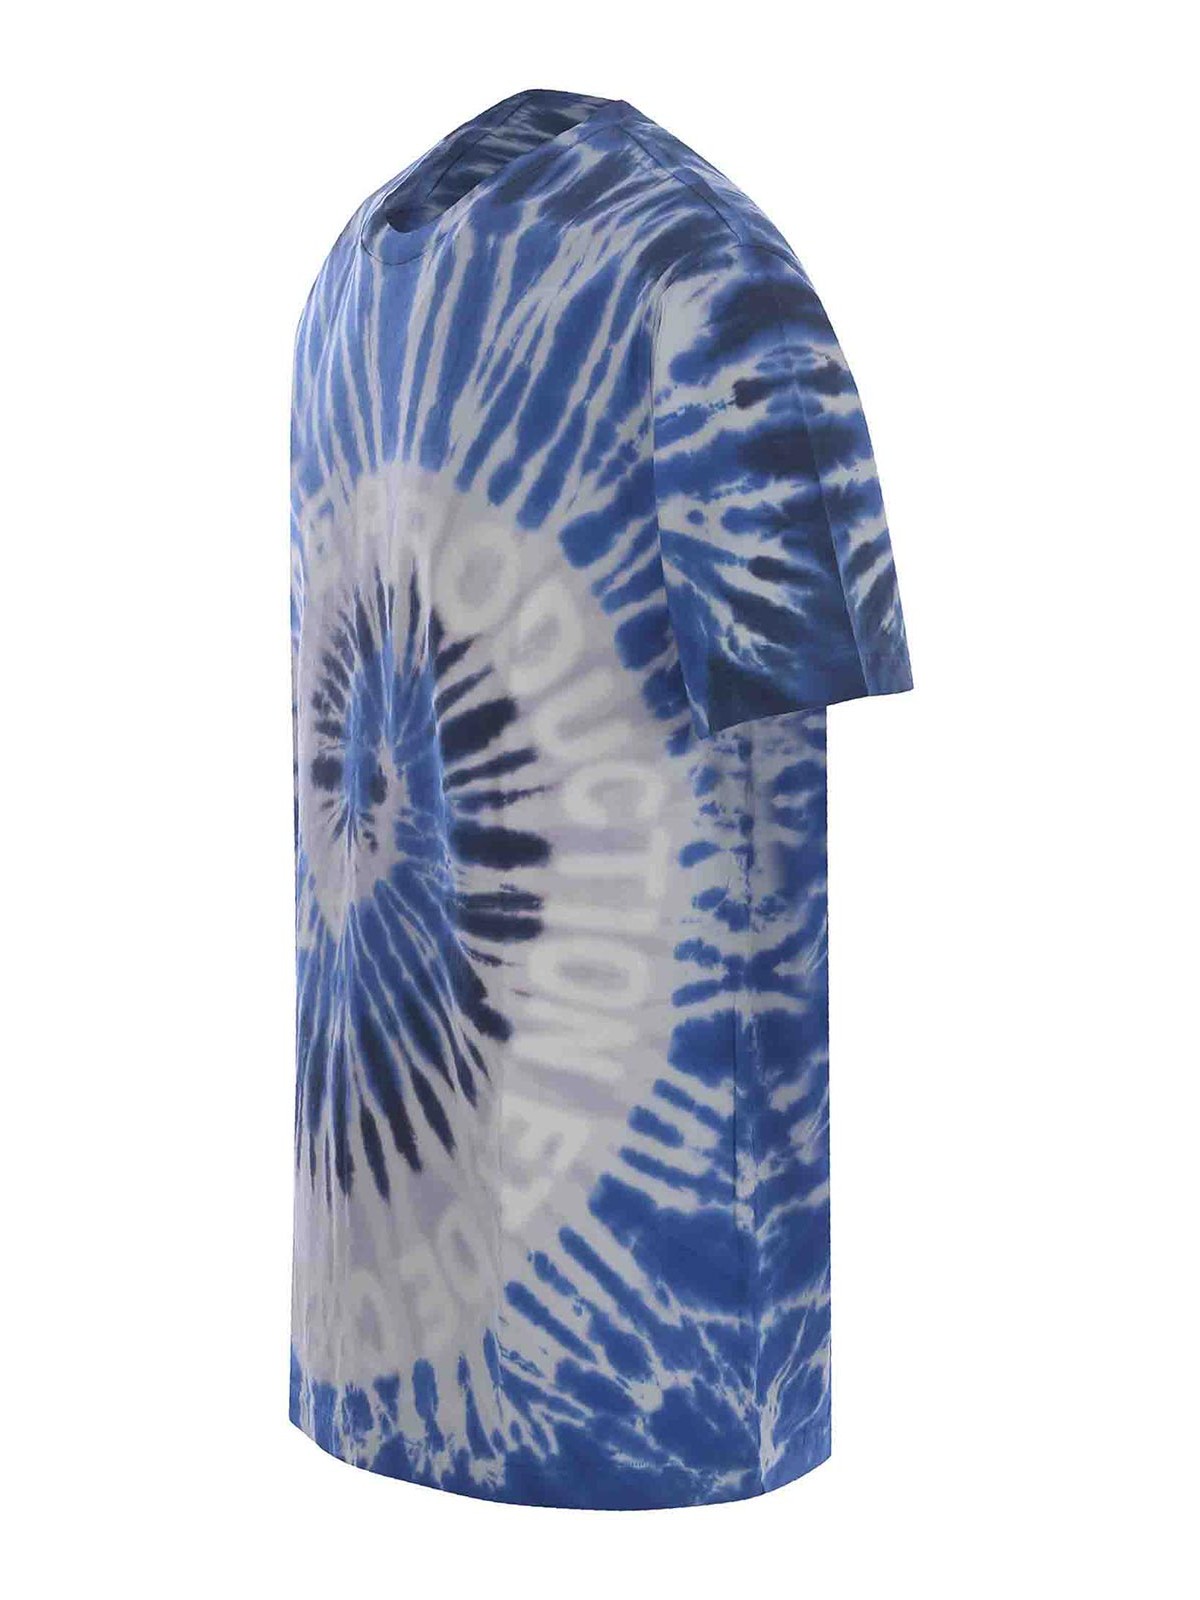 Shop Apc Camiseta - Kurt In Blue